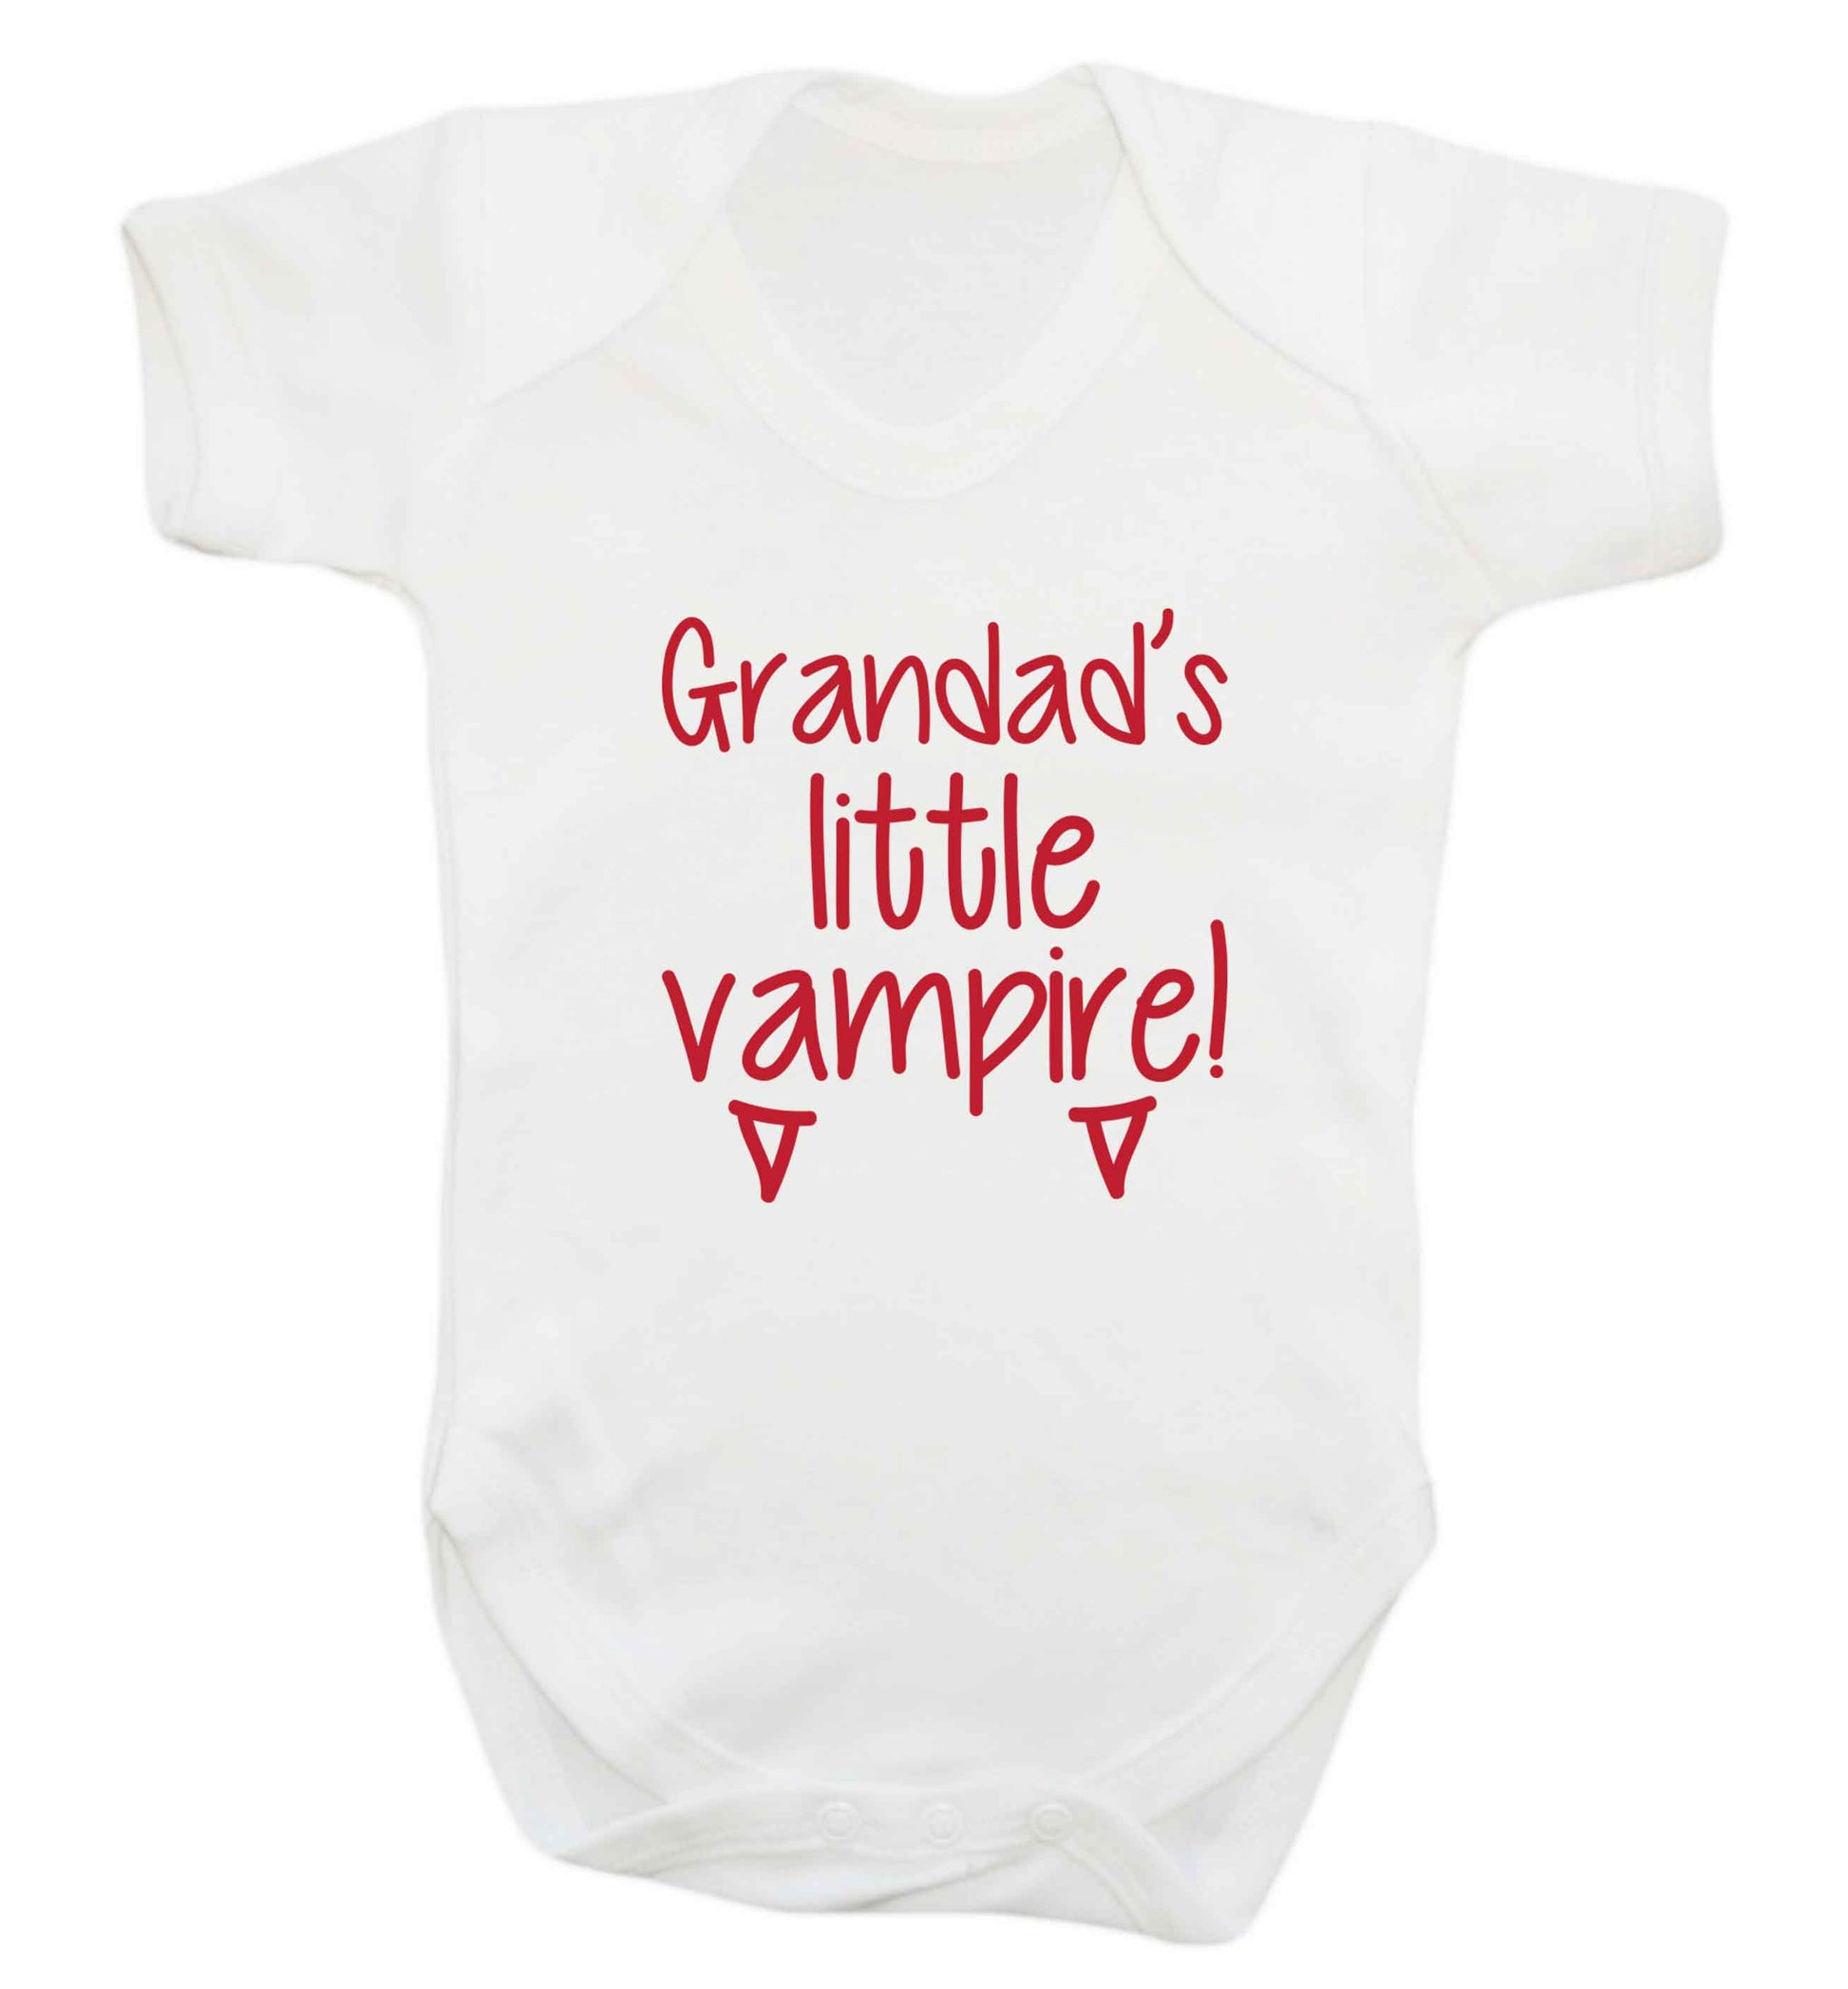 Grandad's little vampire baby vest white 18-24 months